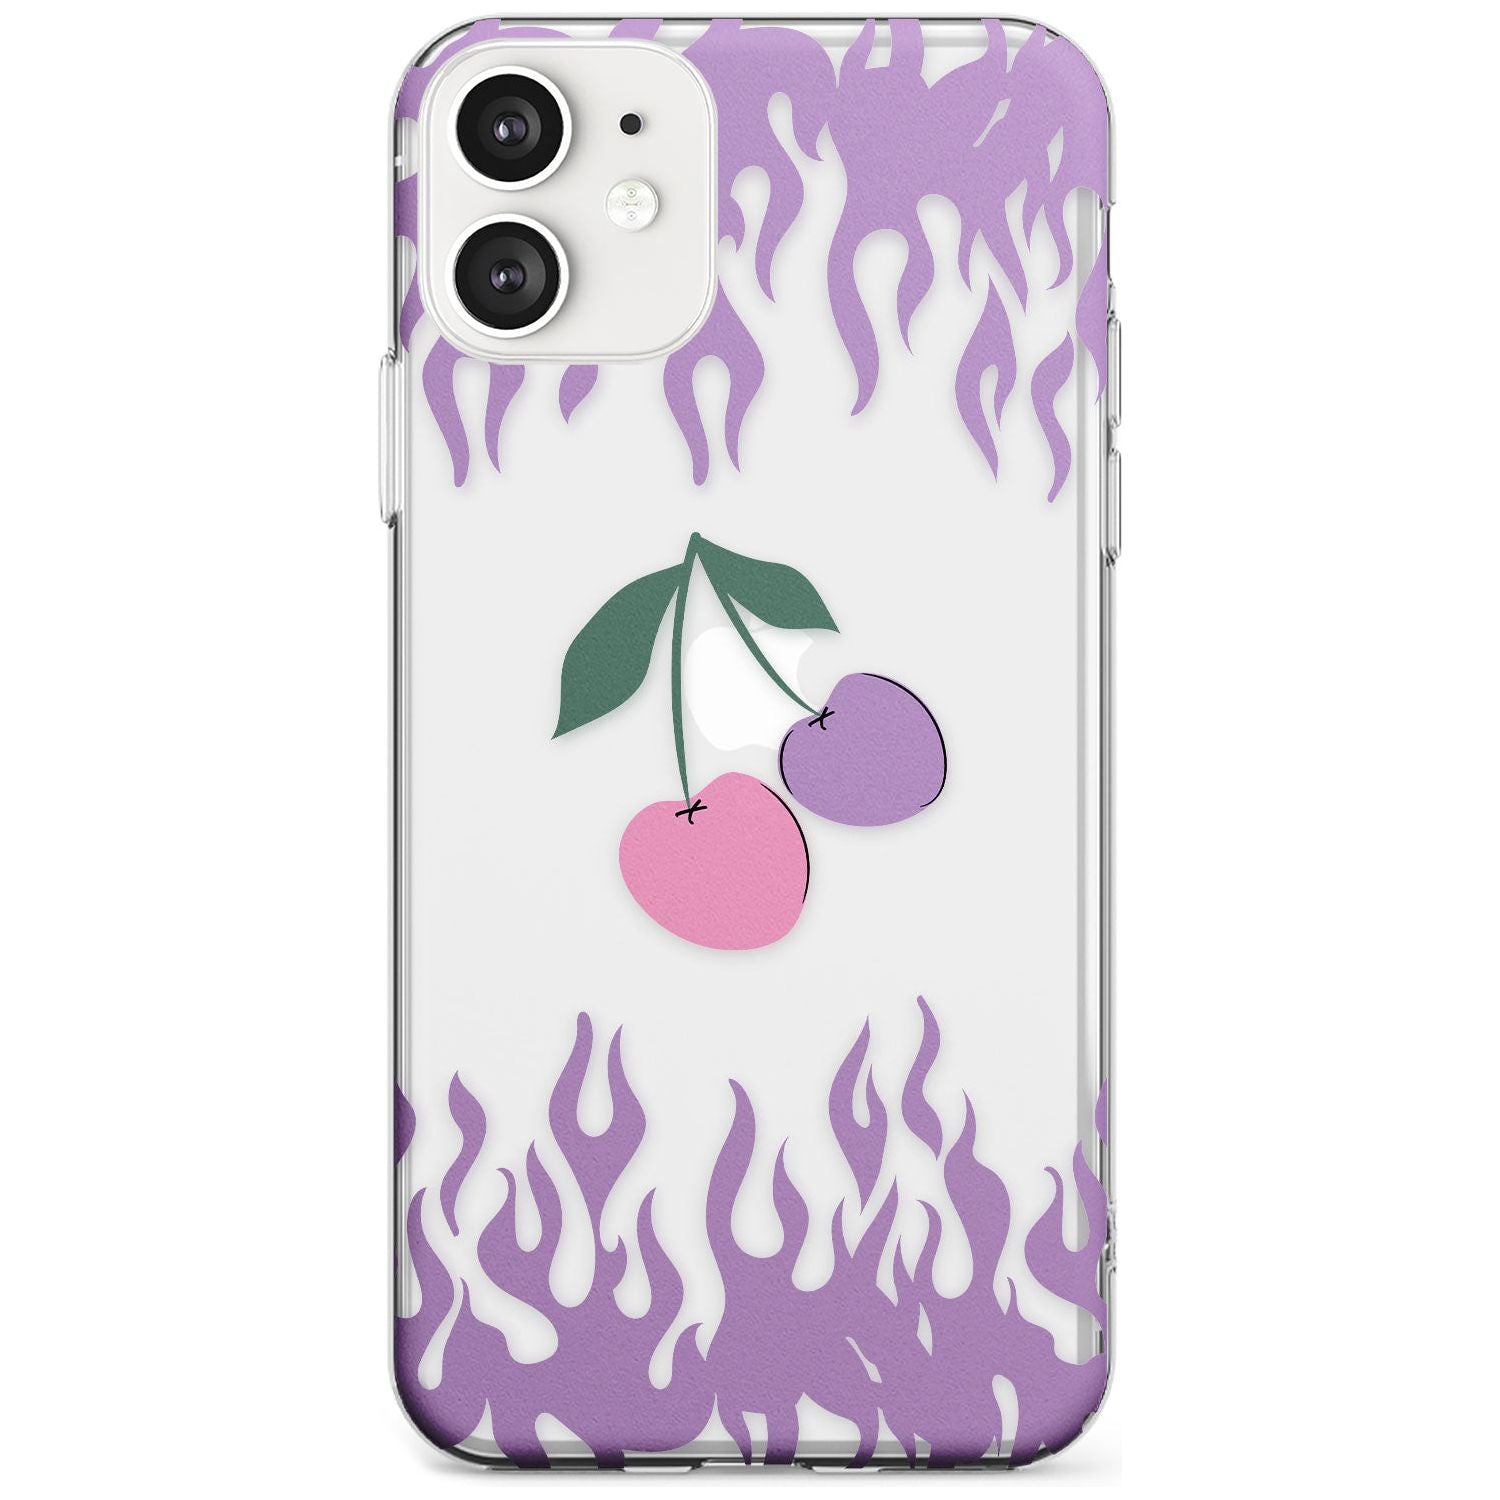 Cherries n' Flames Phone Case iPhone 12 / Clear Case,iPhone 12 Mini / Clear Case,iPhone 11 / Clear Case Blanc Space